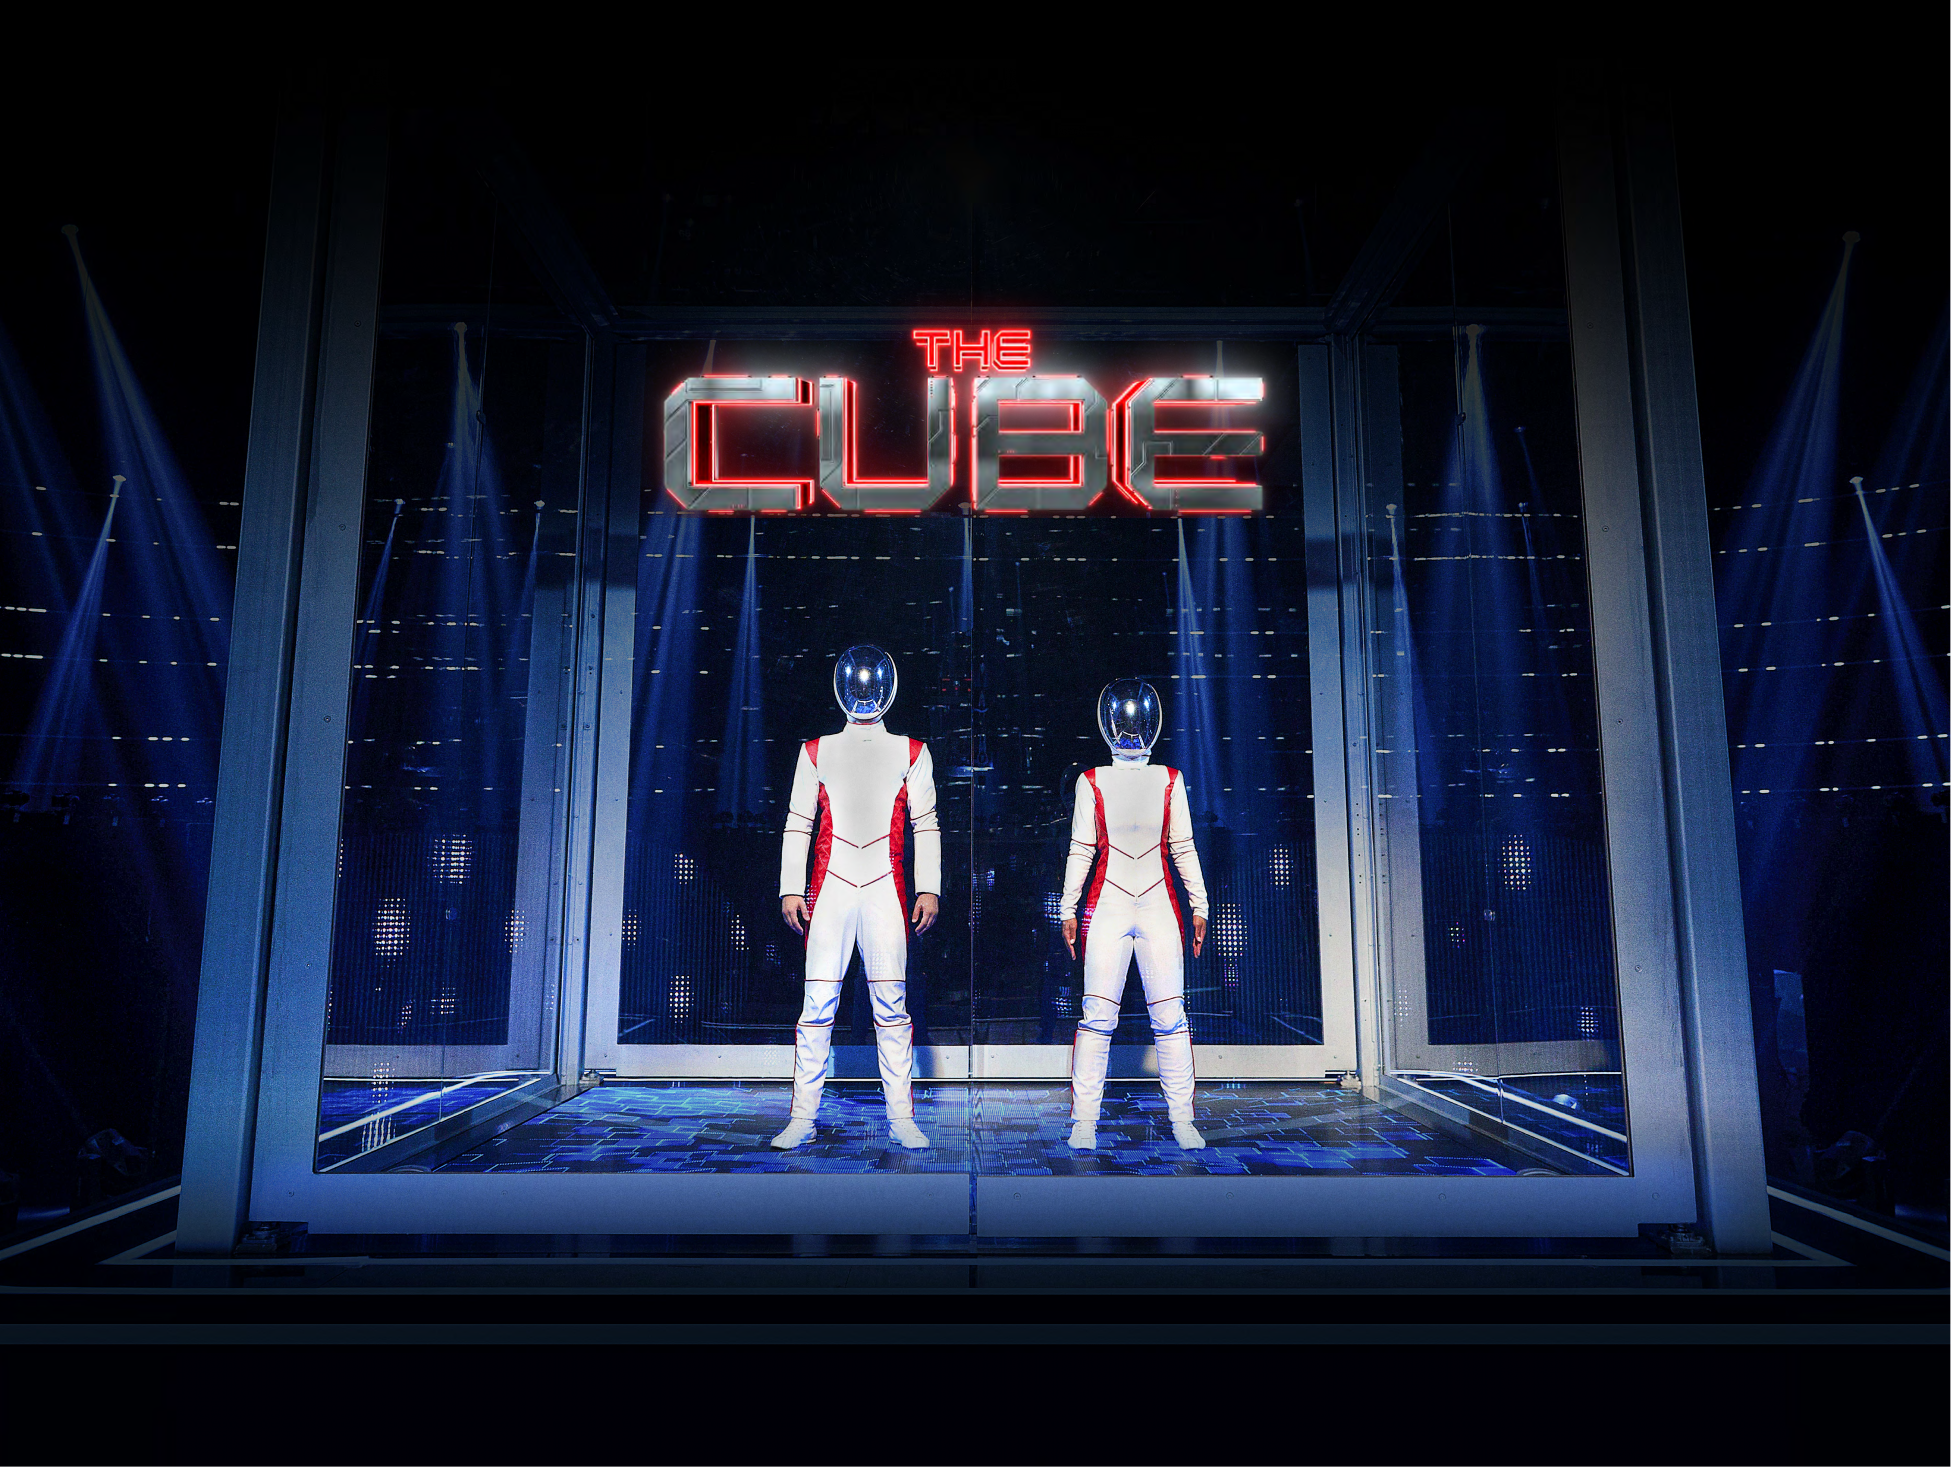 the cube box image